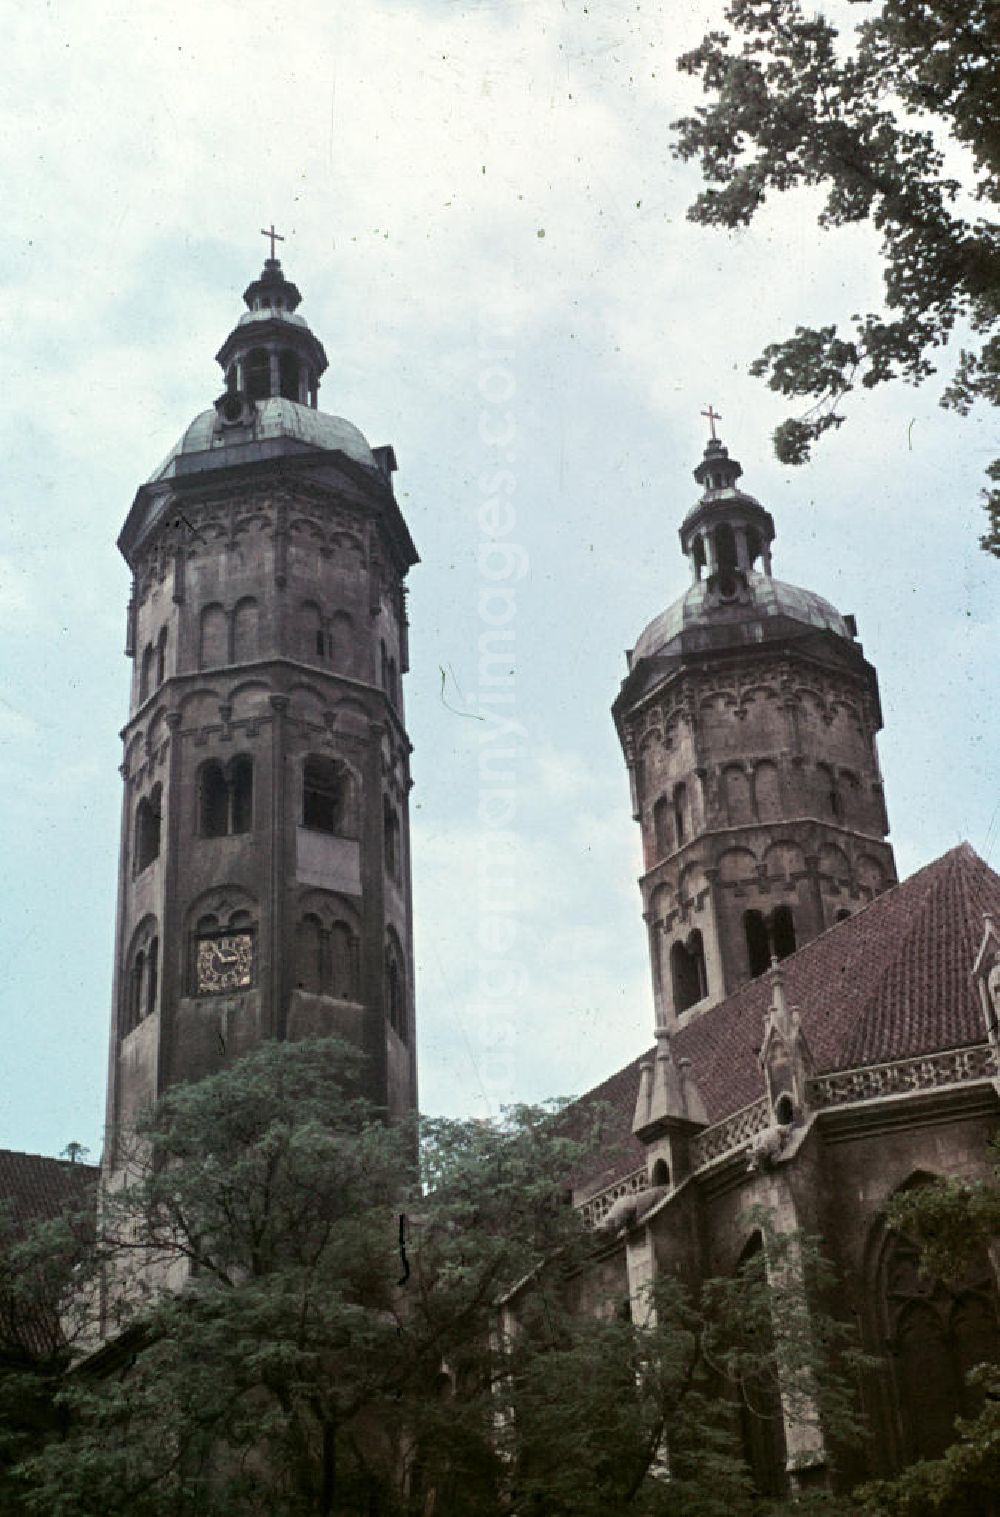 GDR picture archive: Naumburg - Osttürme mit Barockhauben des Naumburger Dom St. Peter und Paul. Easttowers of the Naumburger cathedral.